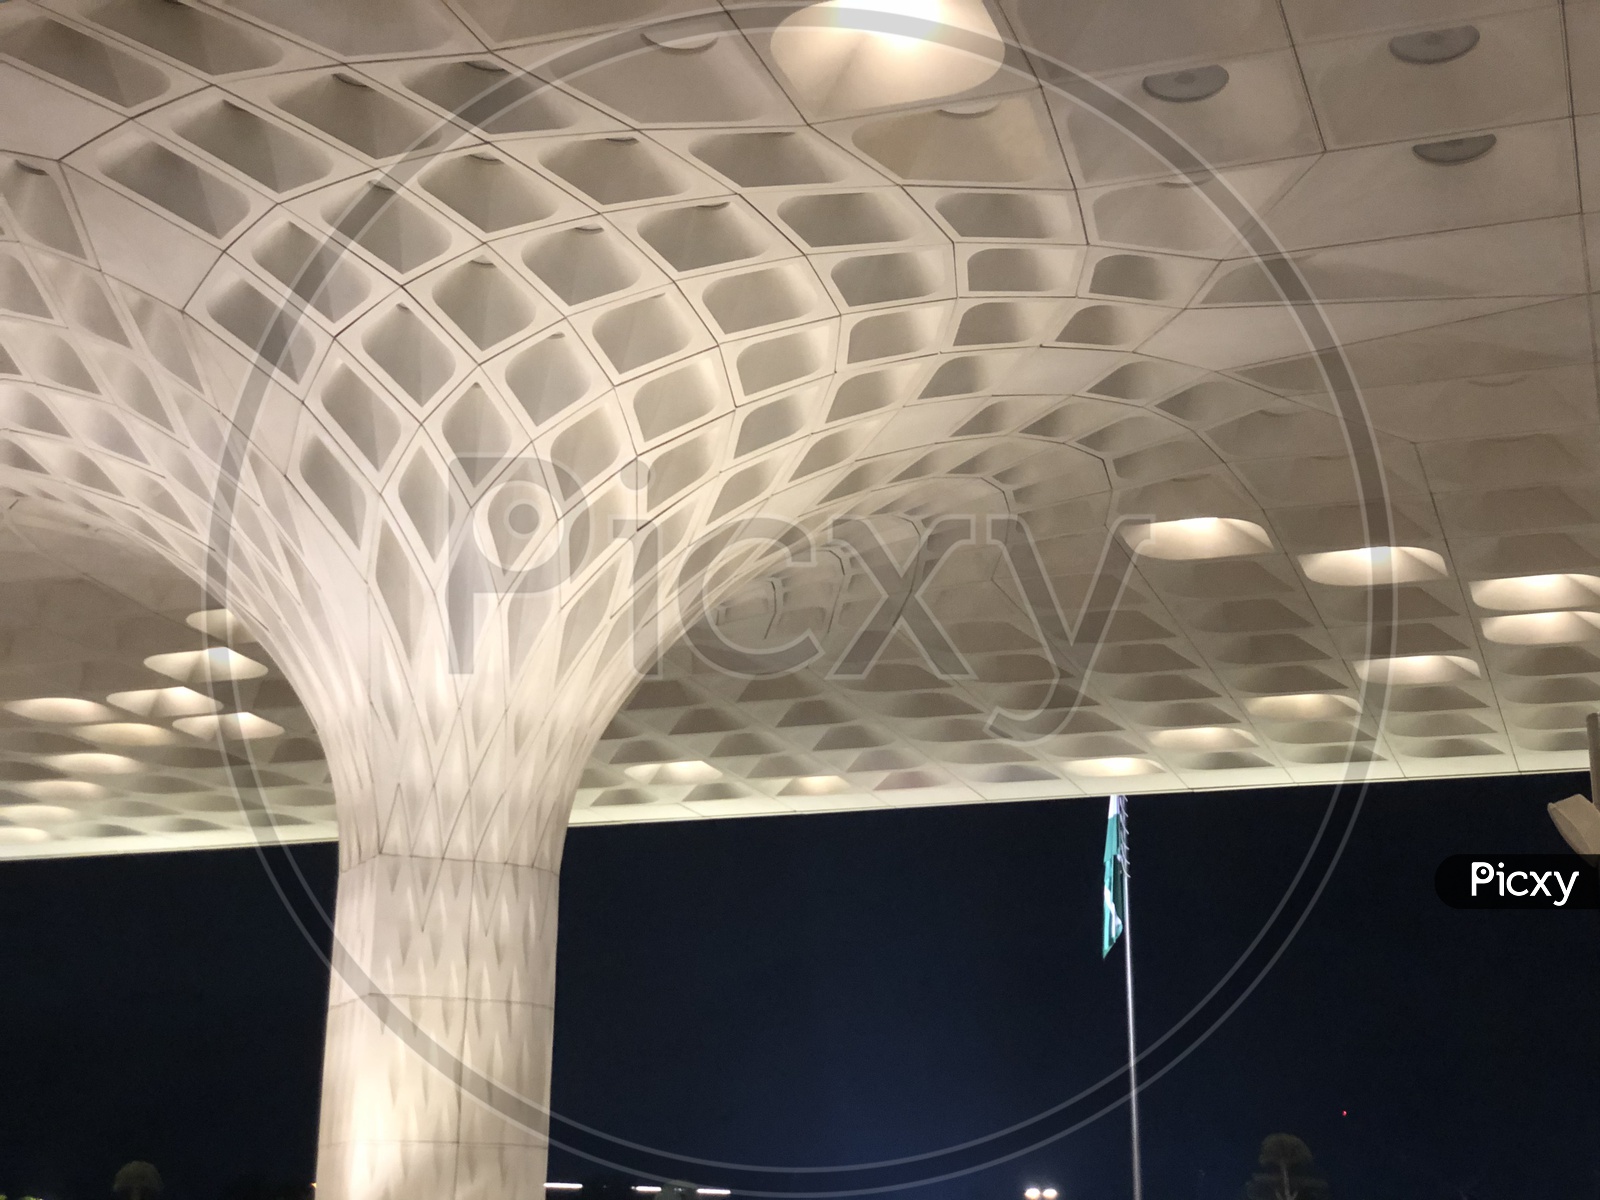 Mumbai Airport Architecture With Roof Design